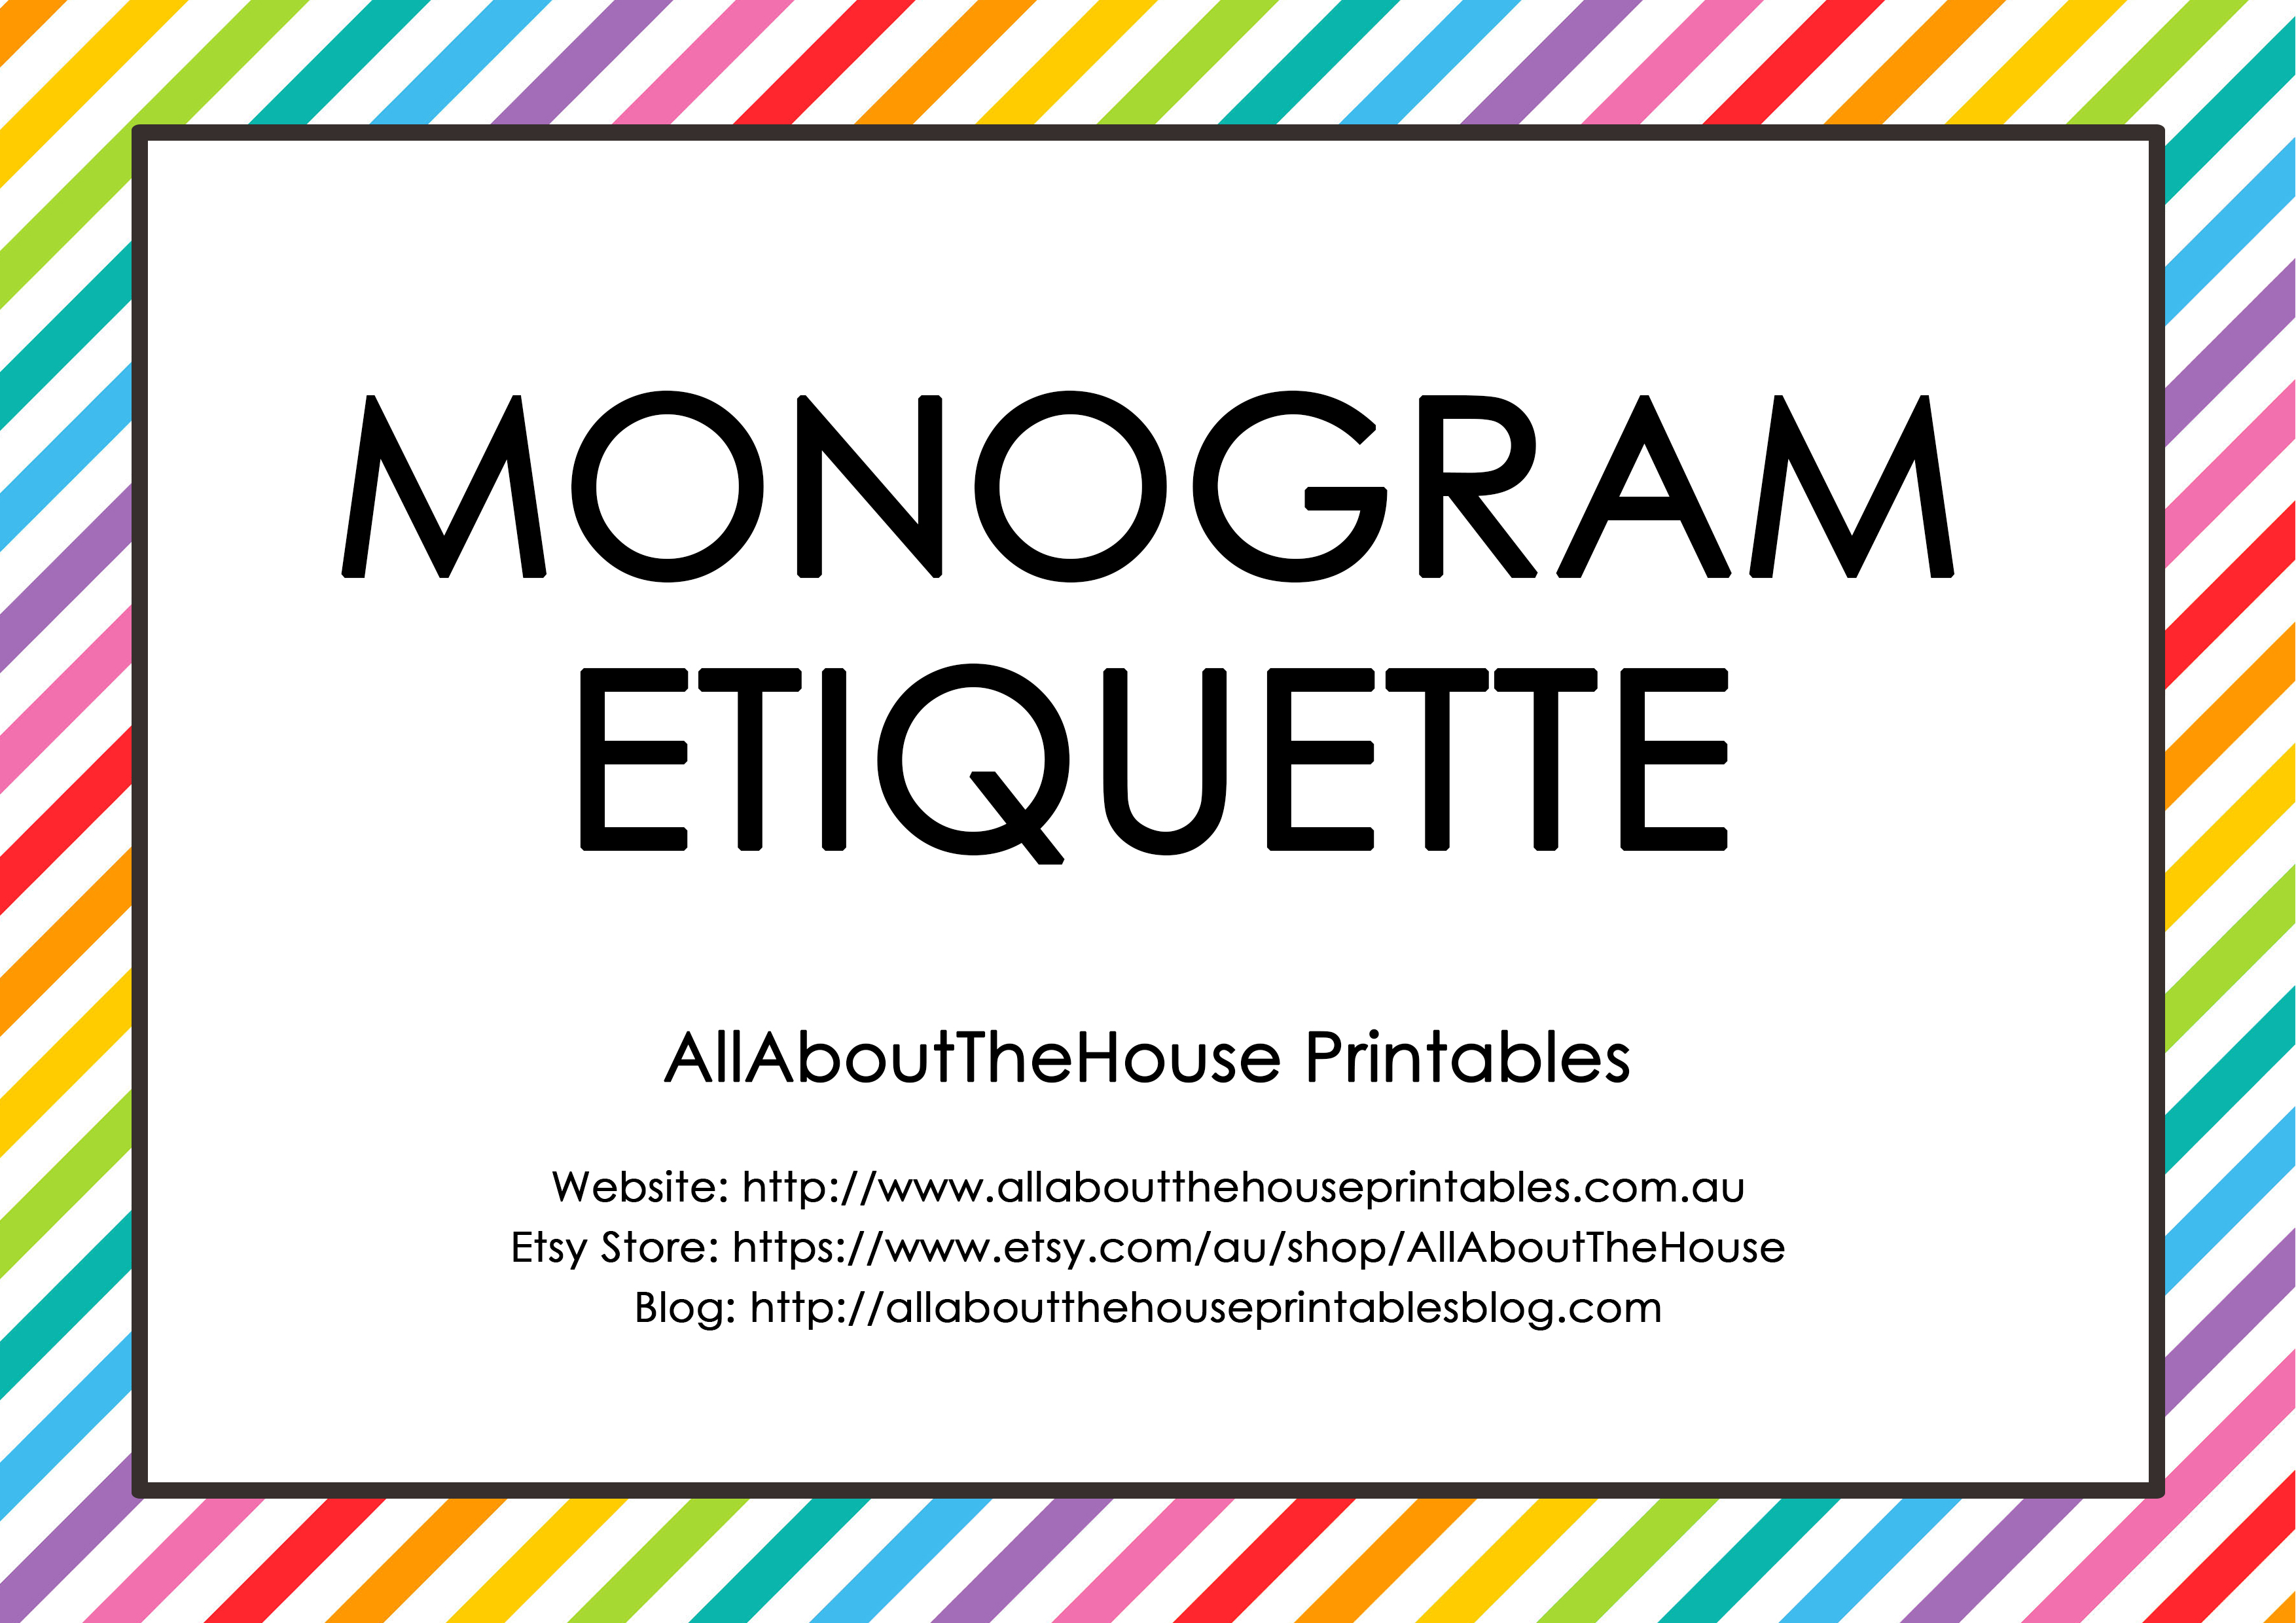 Monogram Etiquette - 3 letter monograms, married couples, hyphenated last name monograms